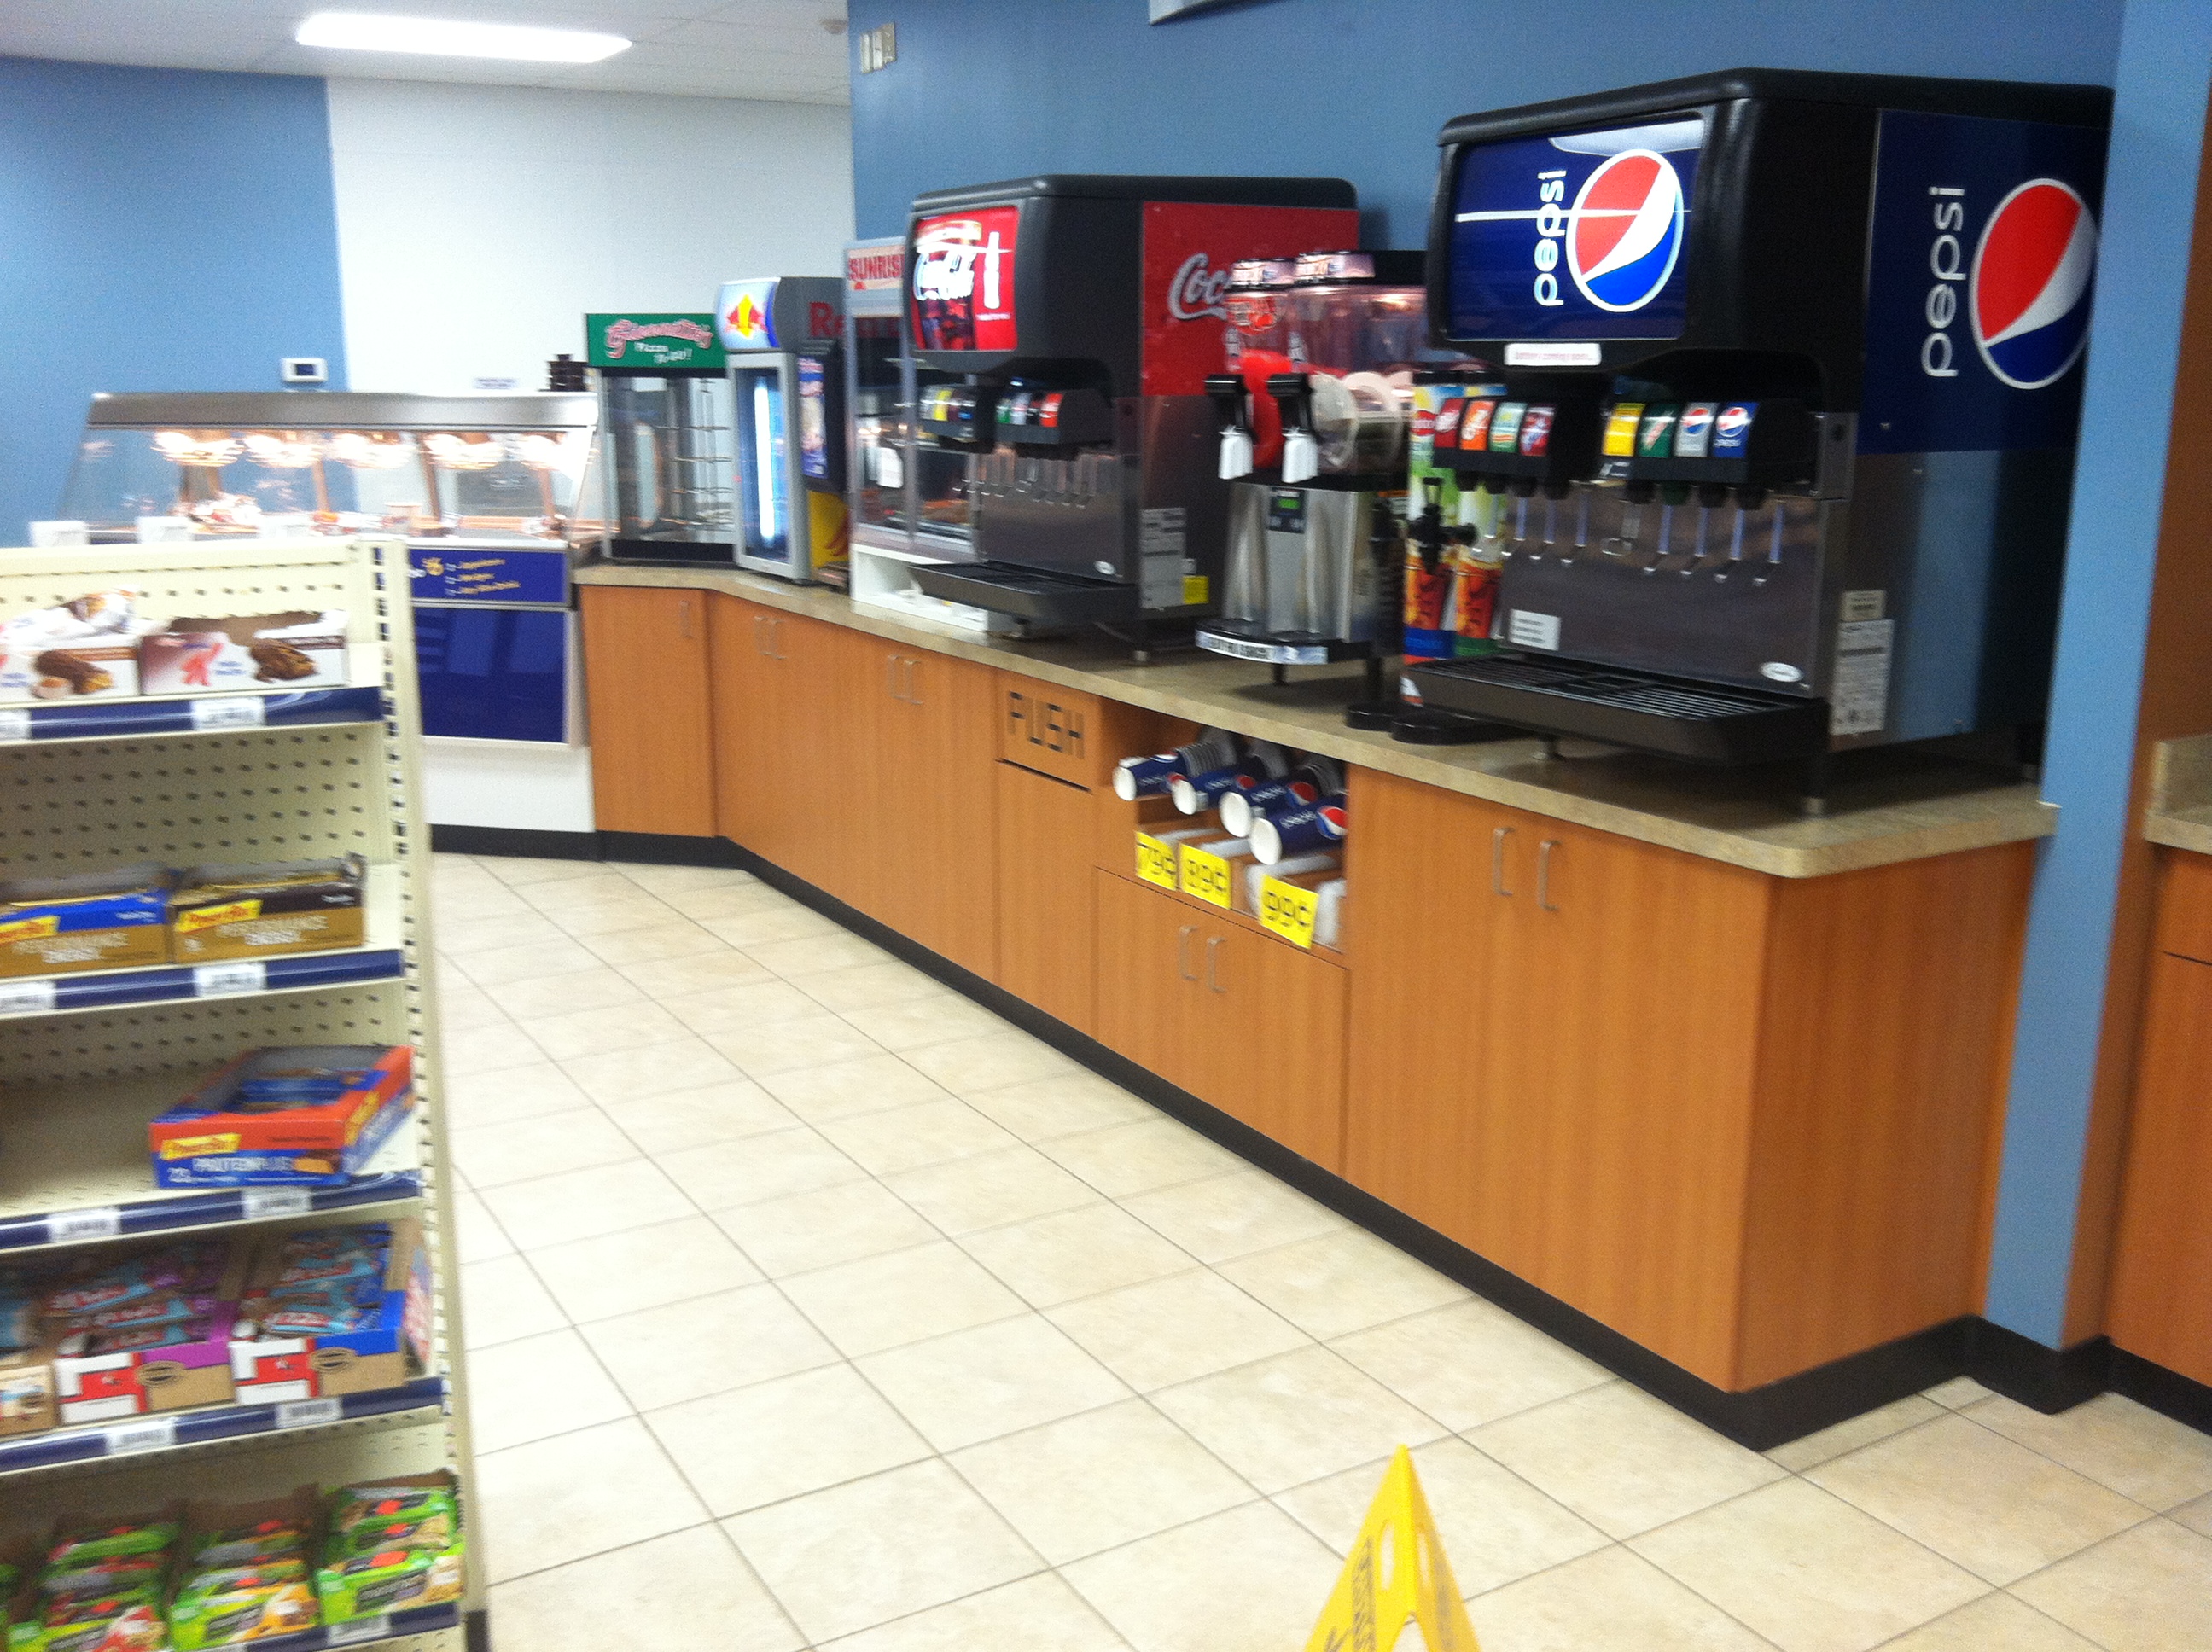 Retail soda display foodservice equipment